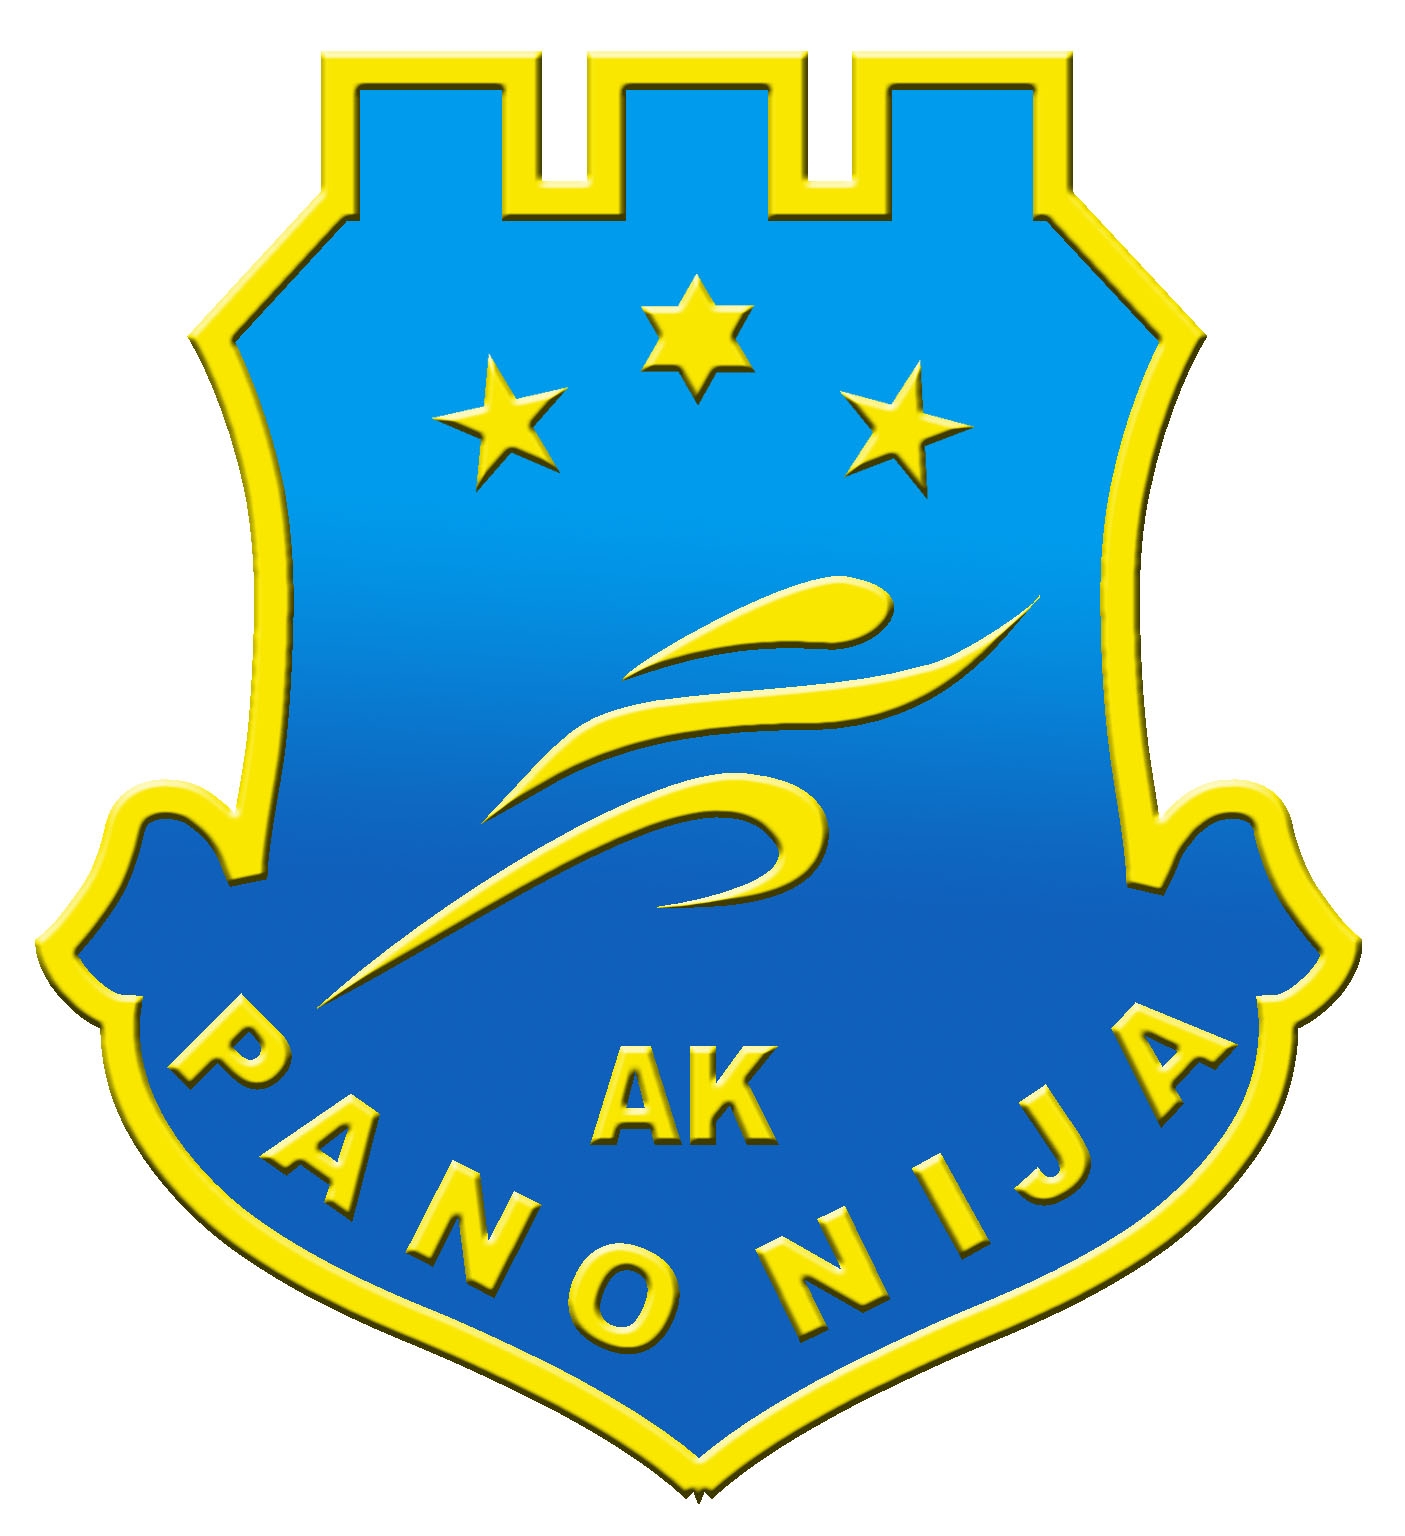 Žetva medalja AK Panonije na tri takmičenja